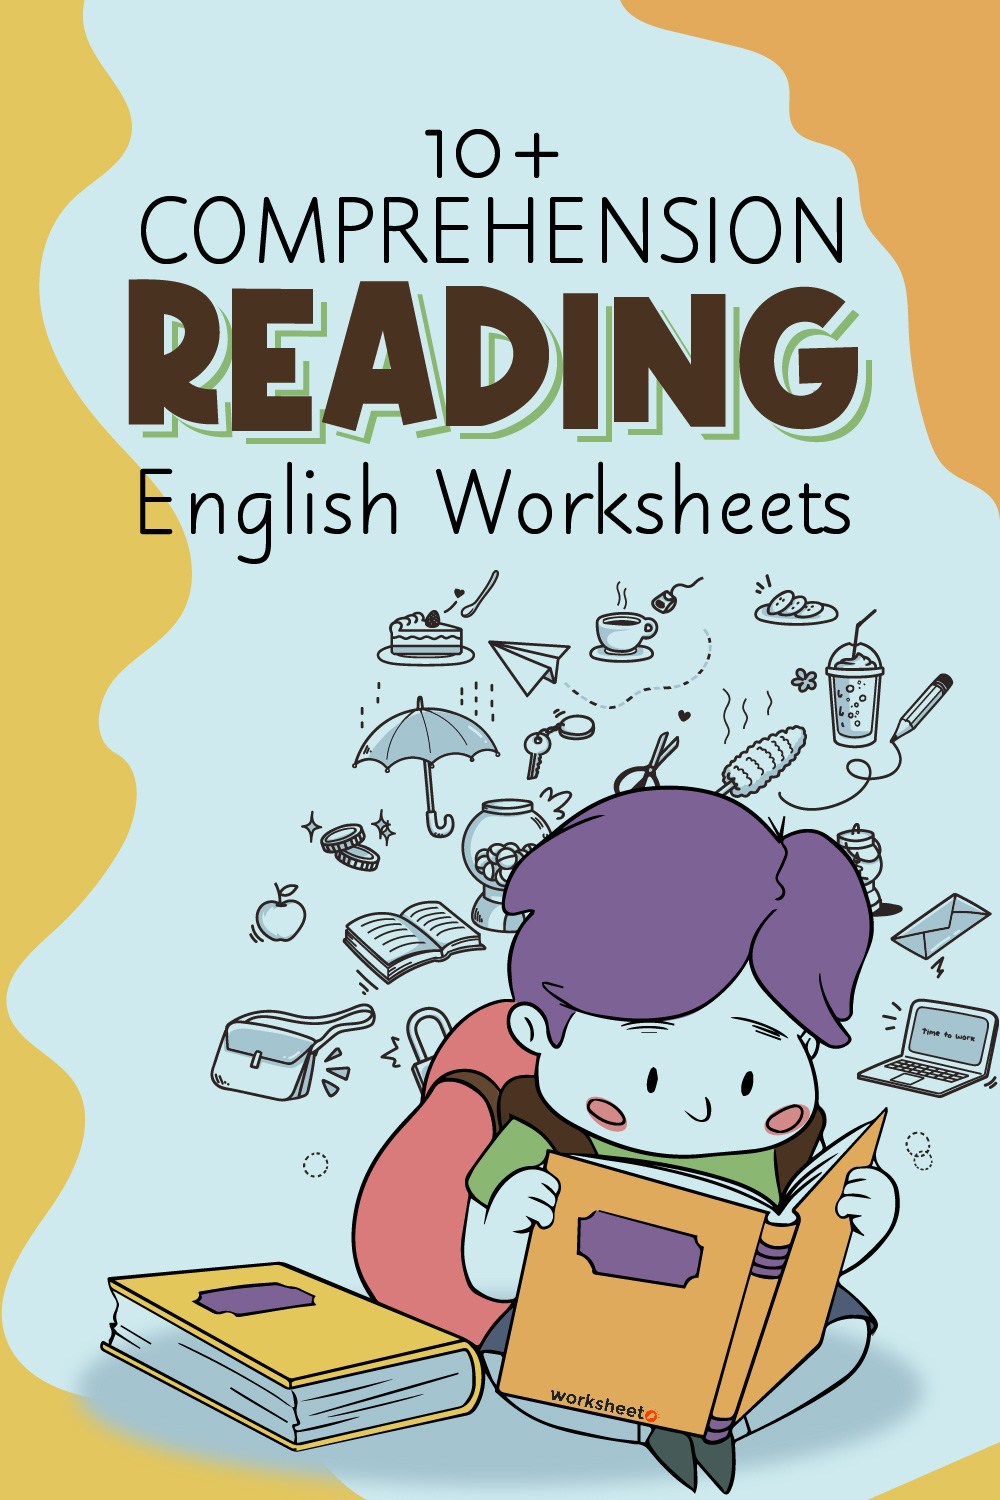 Comprehension Reading English Worksheets